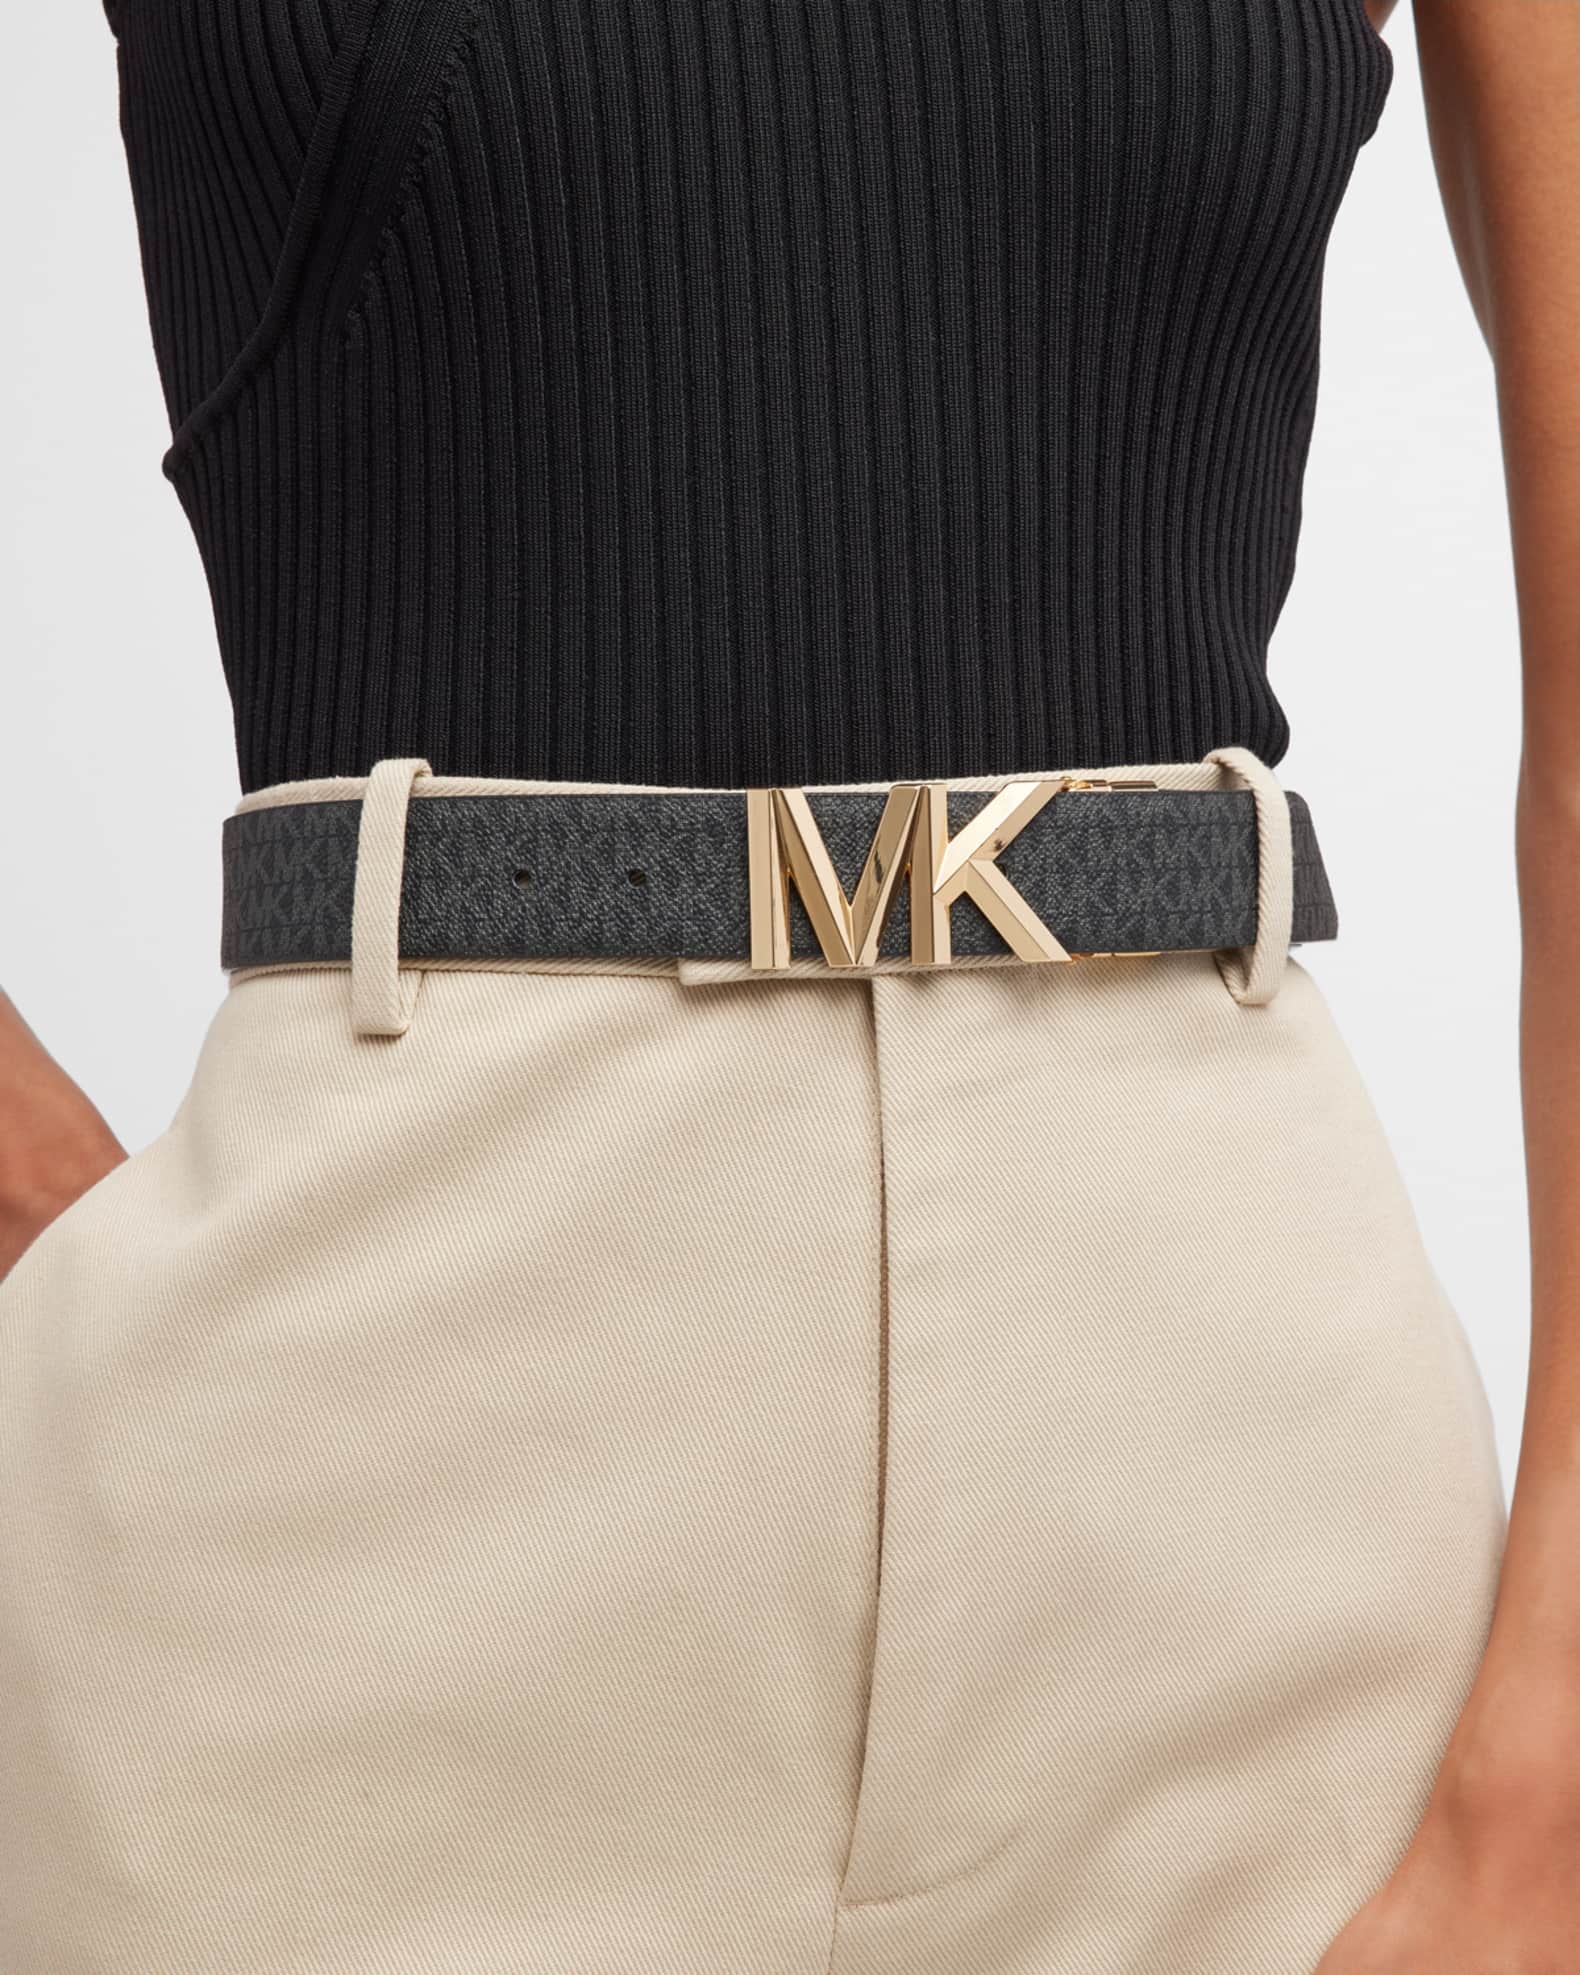 NEW Michael Kors MK Logo 553756C Black Faux Leather Reversible Belt Sz L  NWT $58